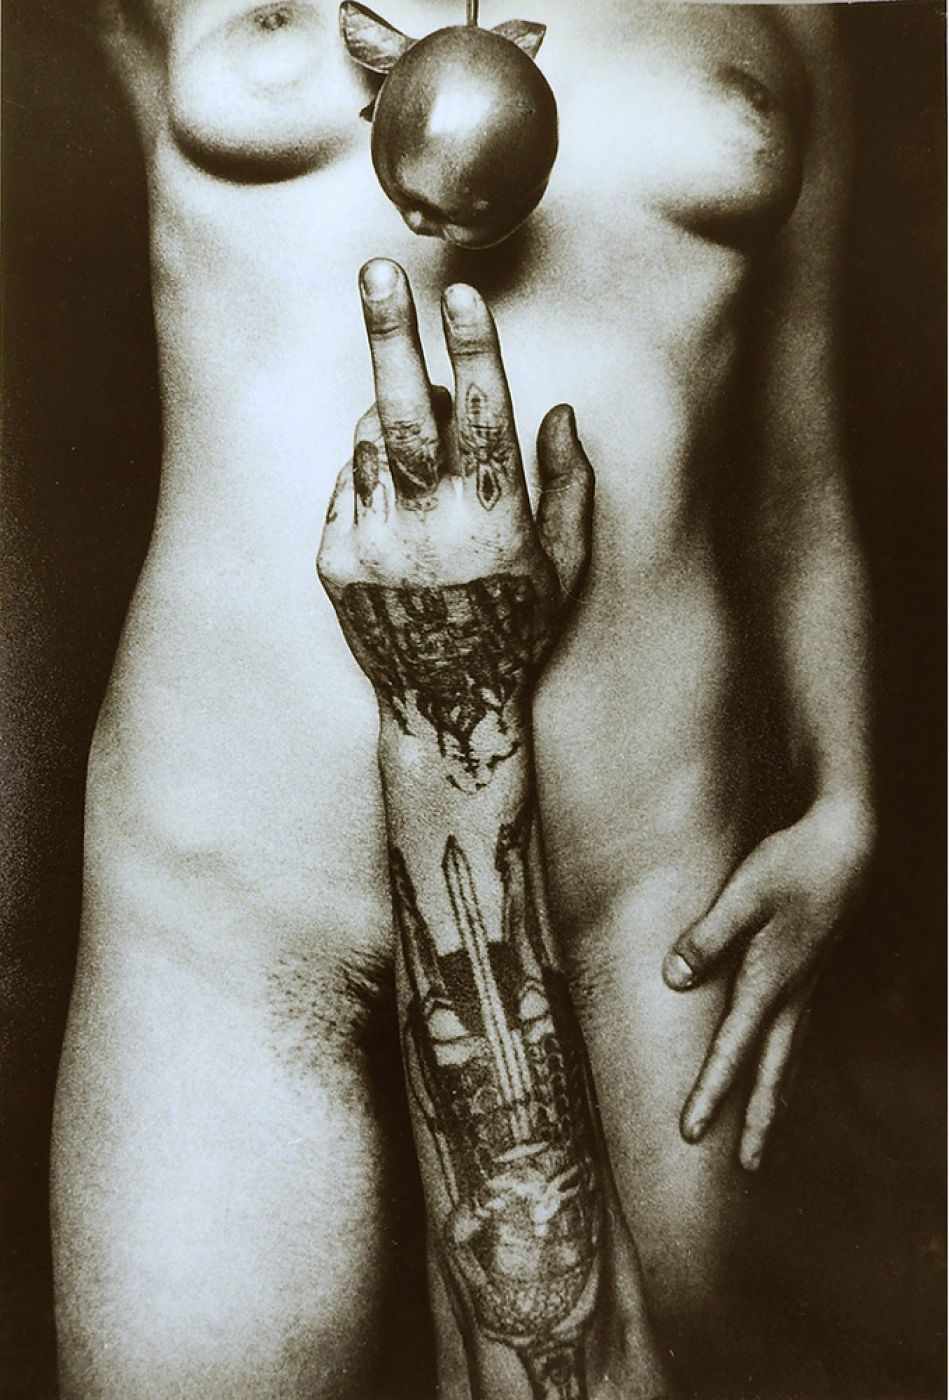 Sergei Vasiliev, “Russian criminal tattoo Encyclopaedia”, 1989